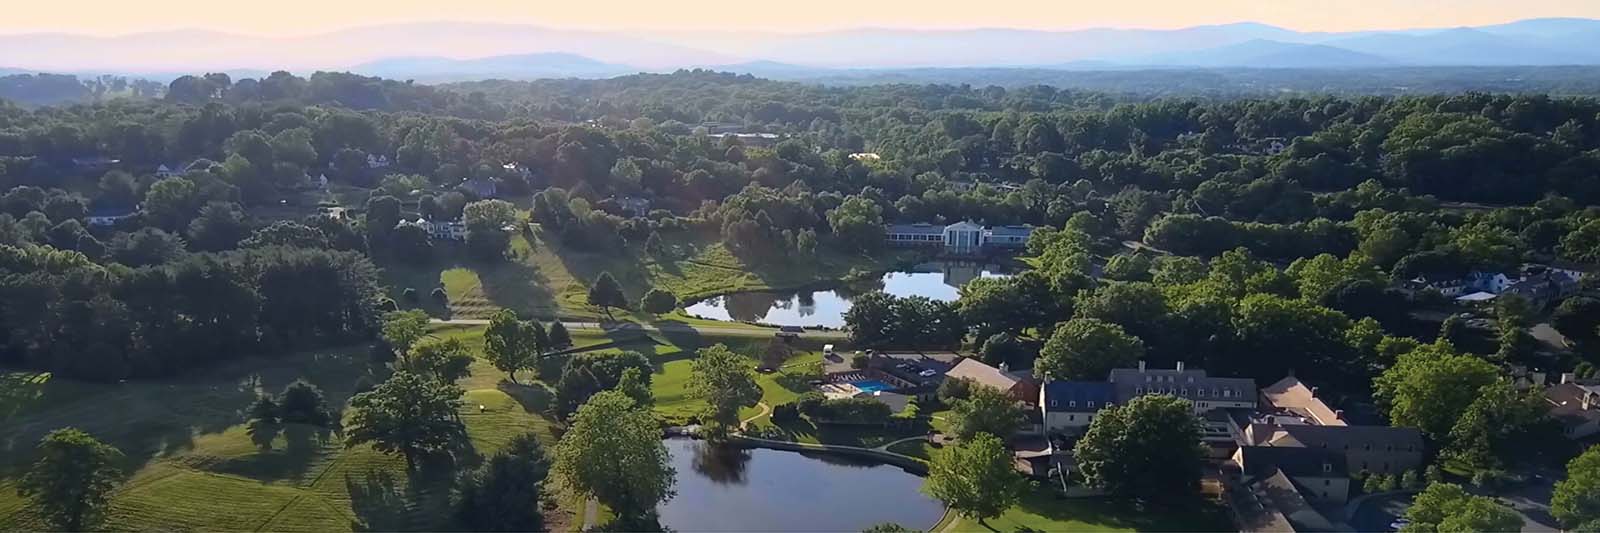 Photo of Boar's Head Resort, Charlottesville, VA